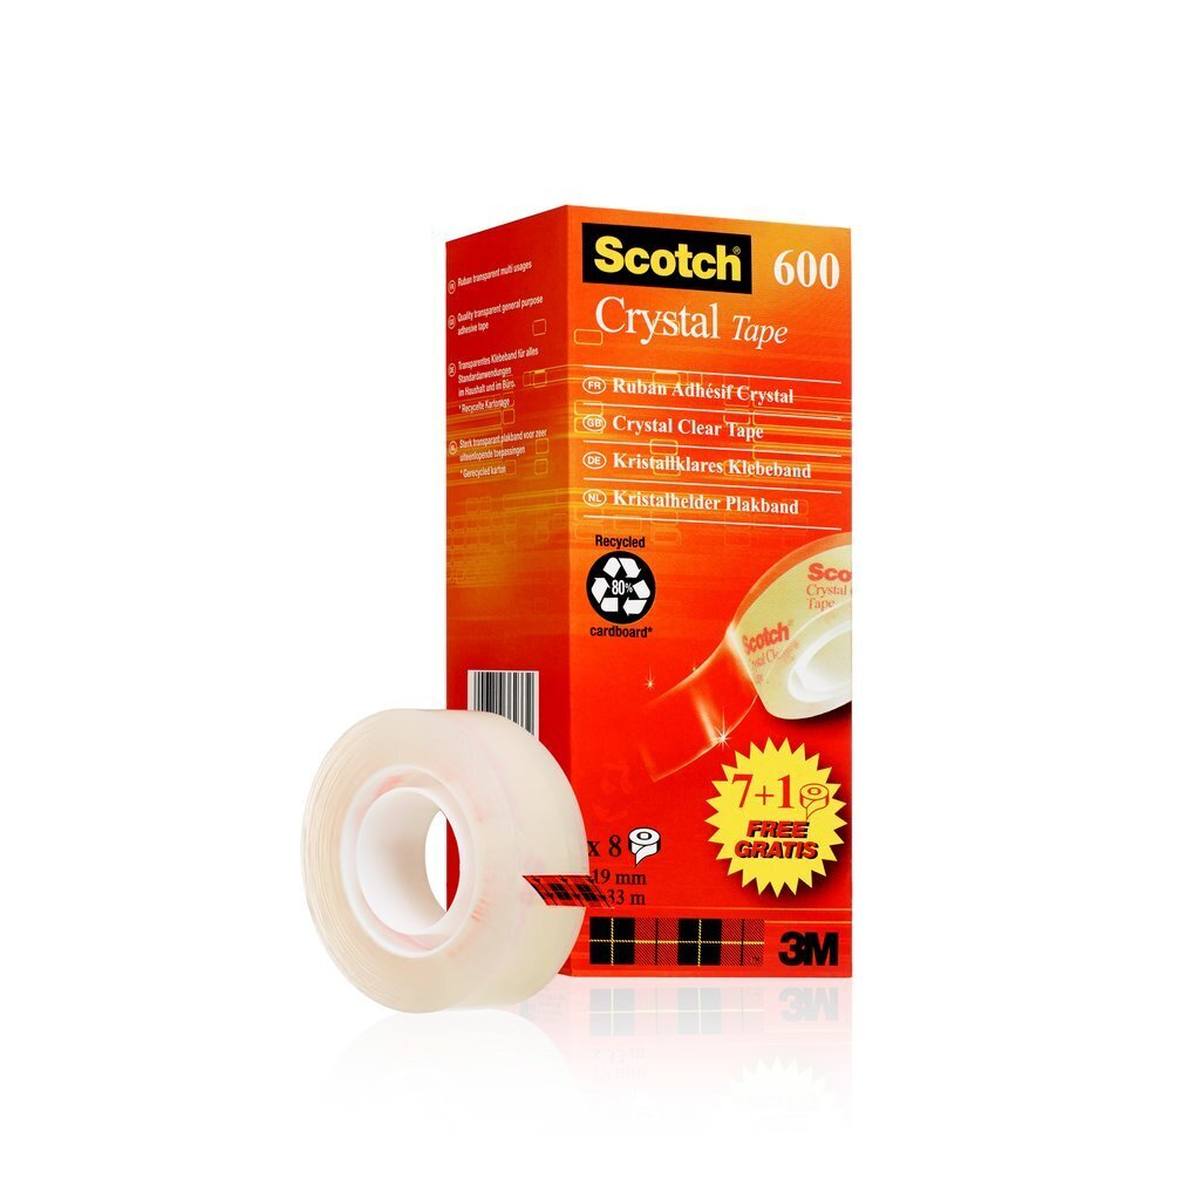 3M Scotch Crystal adhesive tape promotion, 8 rolls 19 mm x 33 m